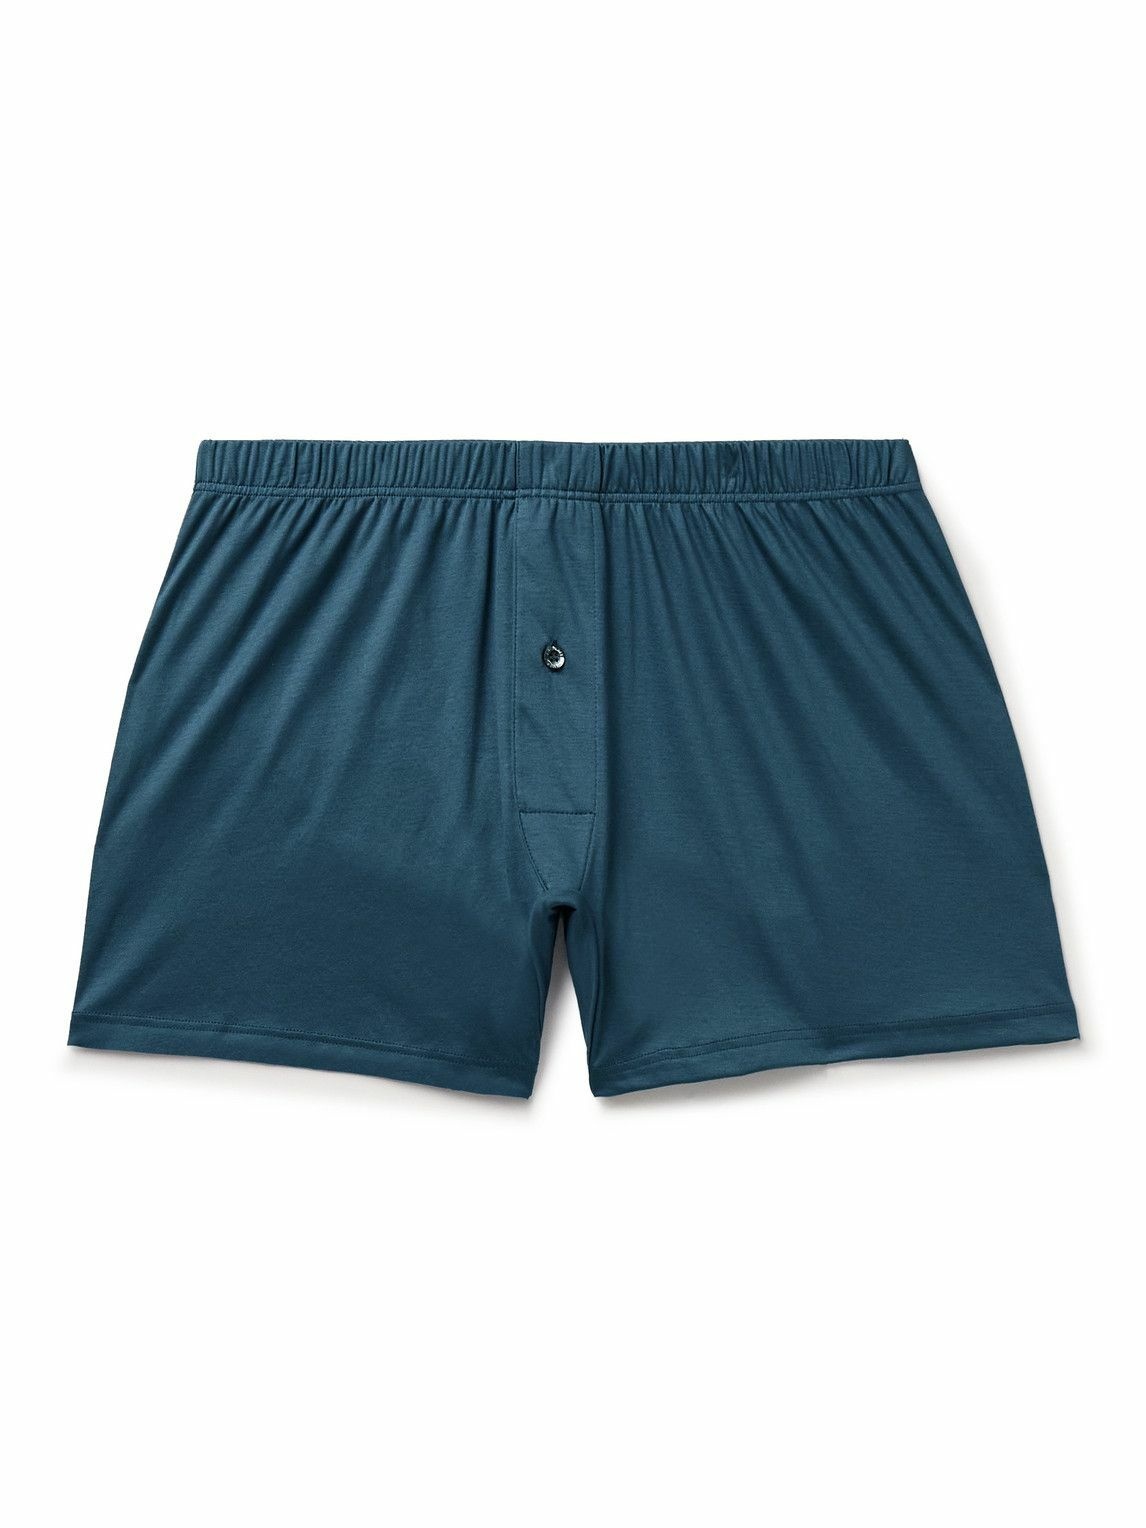 Photo: Zimmerli - Sea Island Cotton Boxer Shorts - Blue